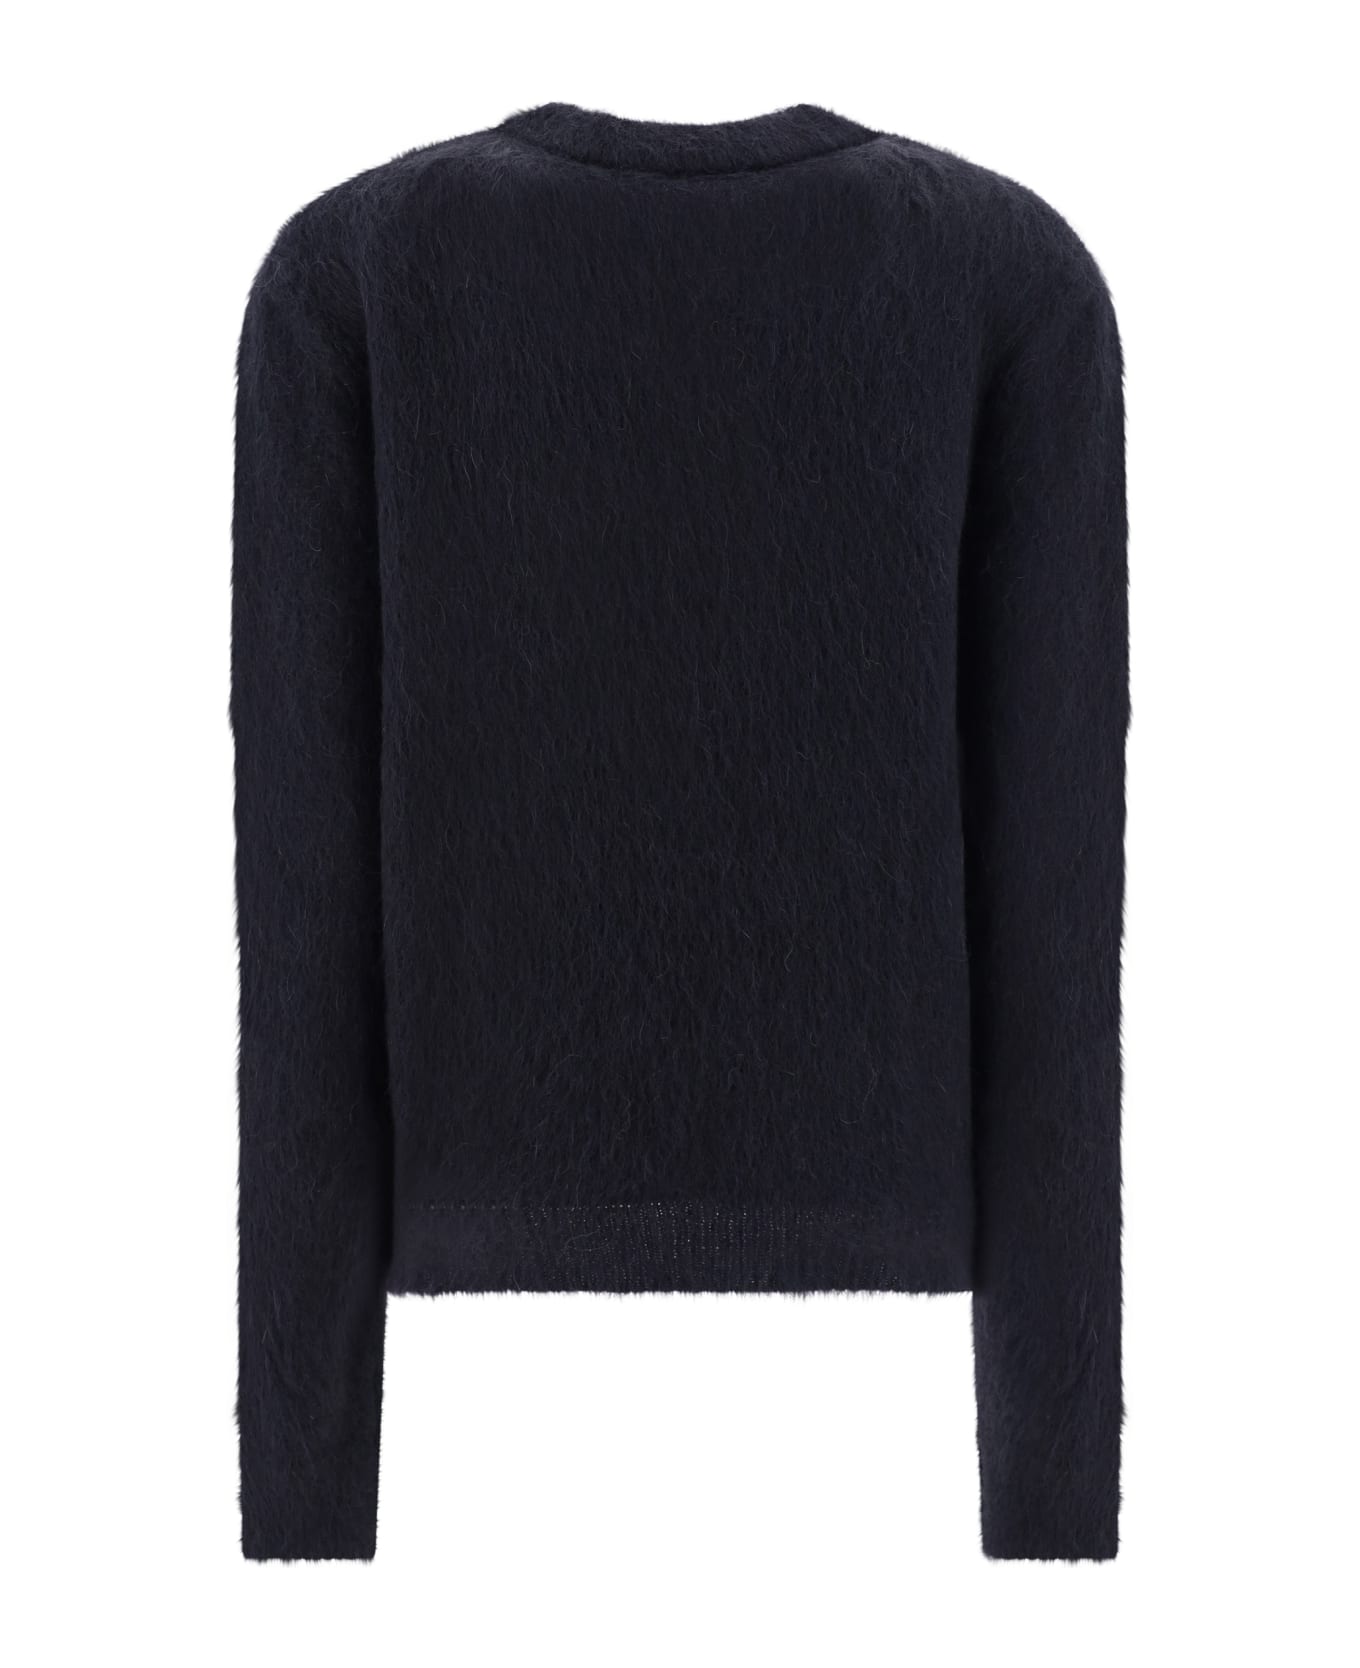 Balmain Sweater - Noir/blanc